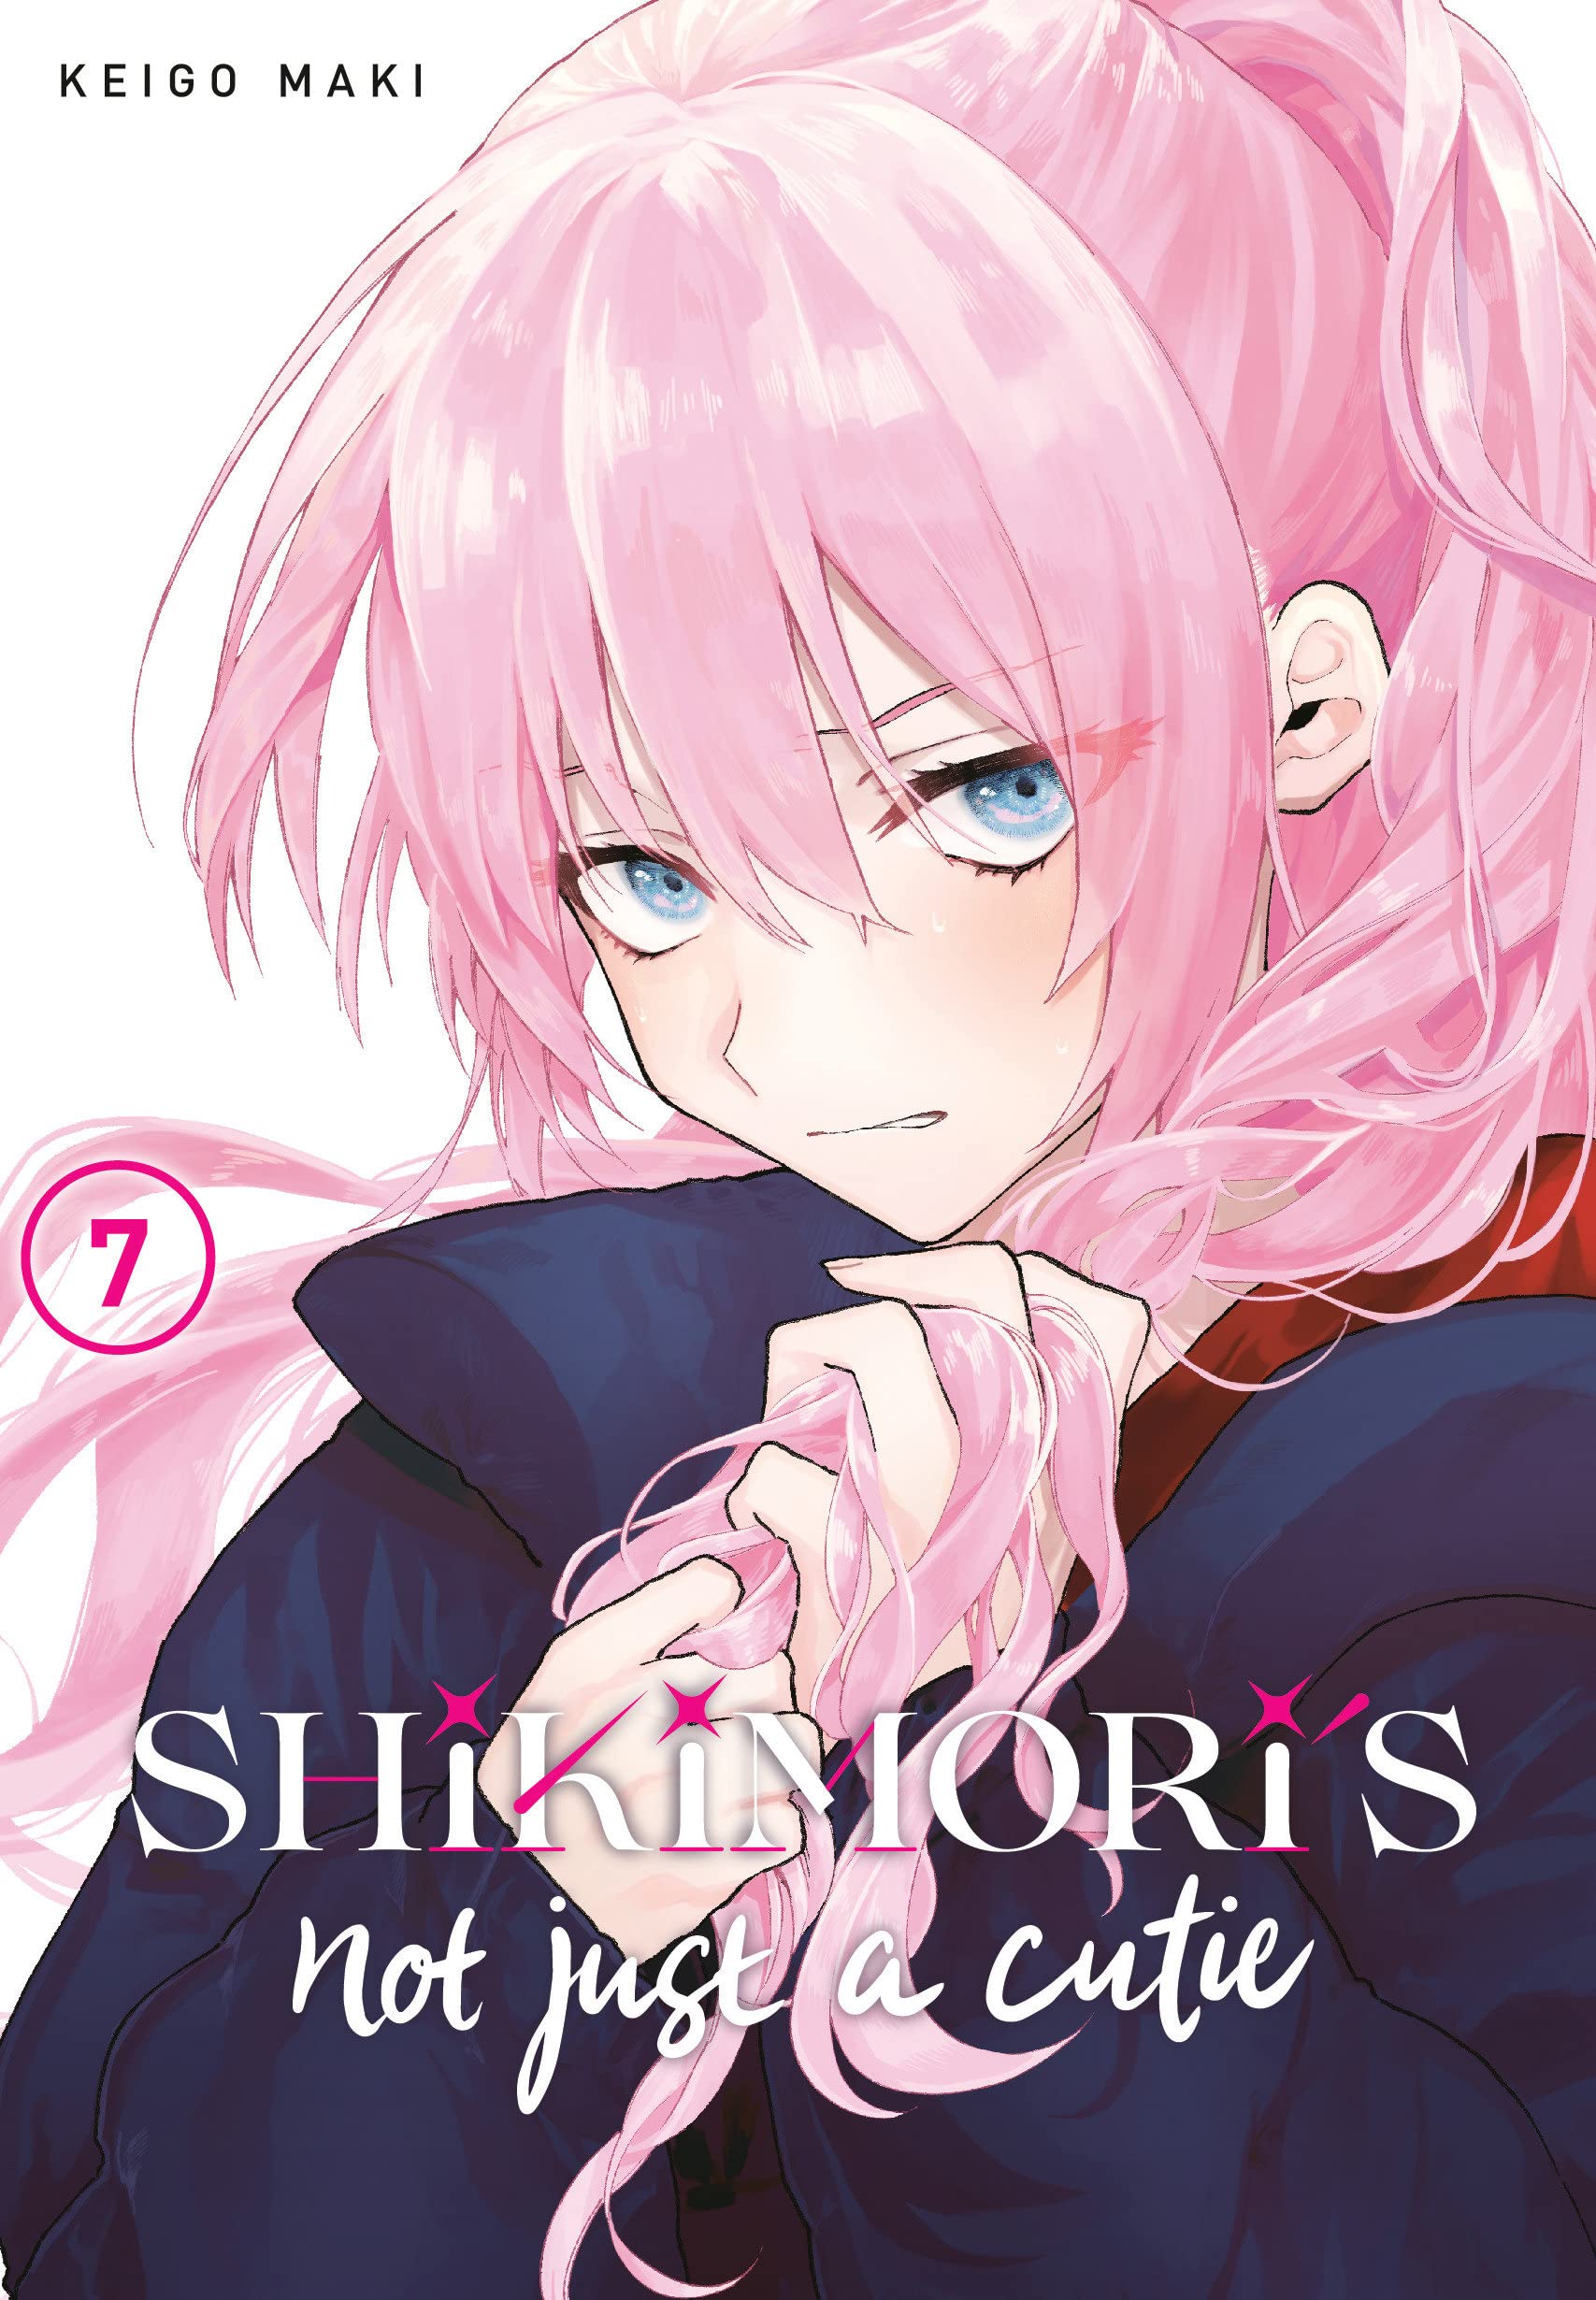 Episode 2, Shikimori's Not Just a Cutie Wiki